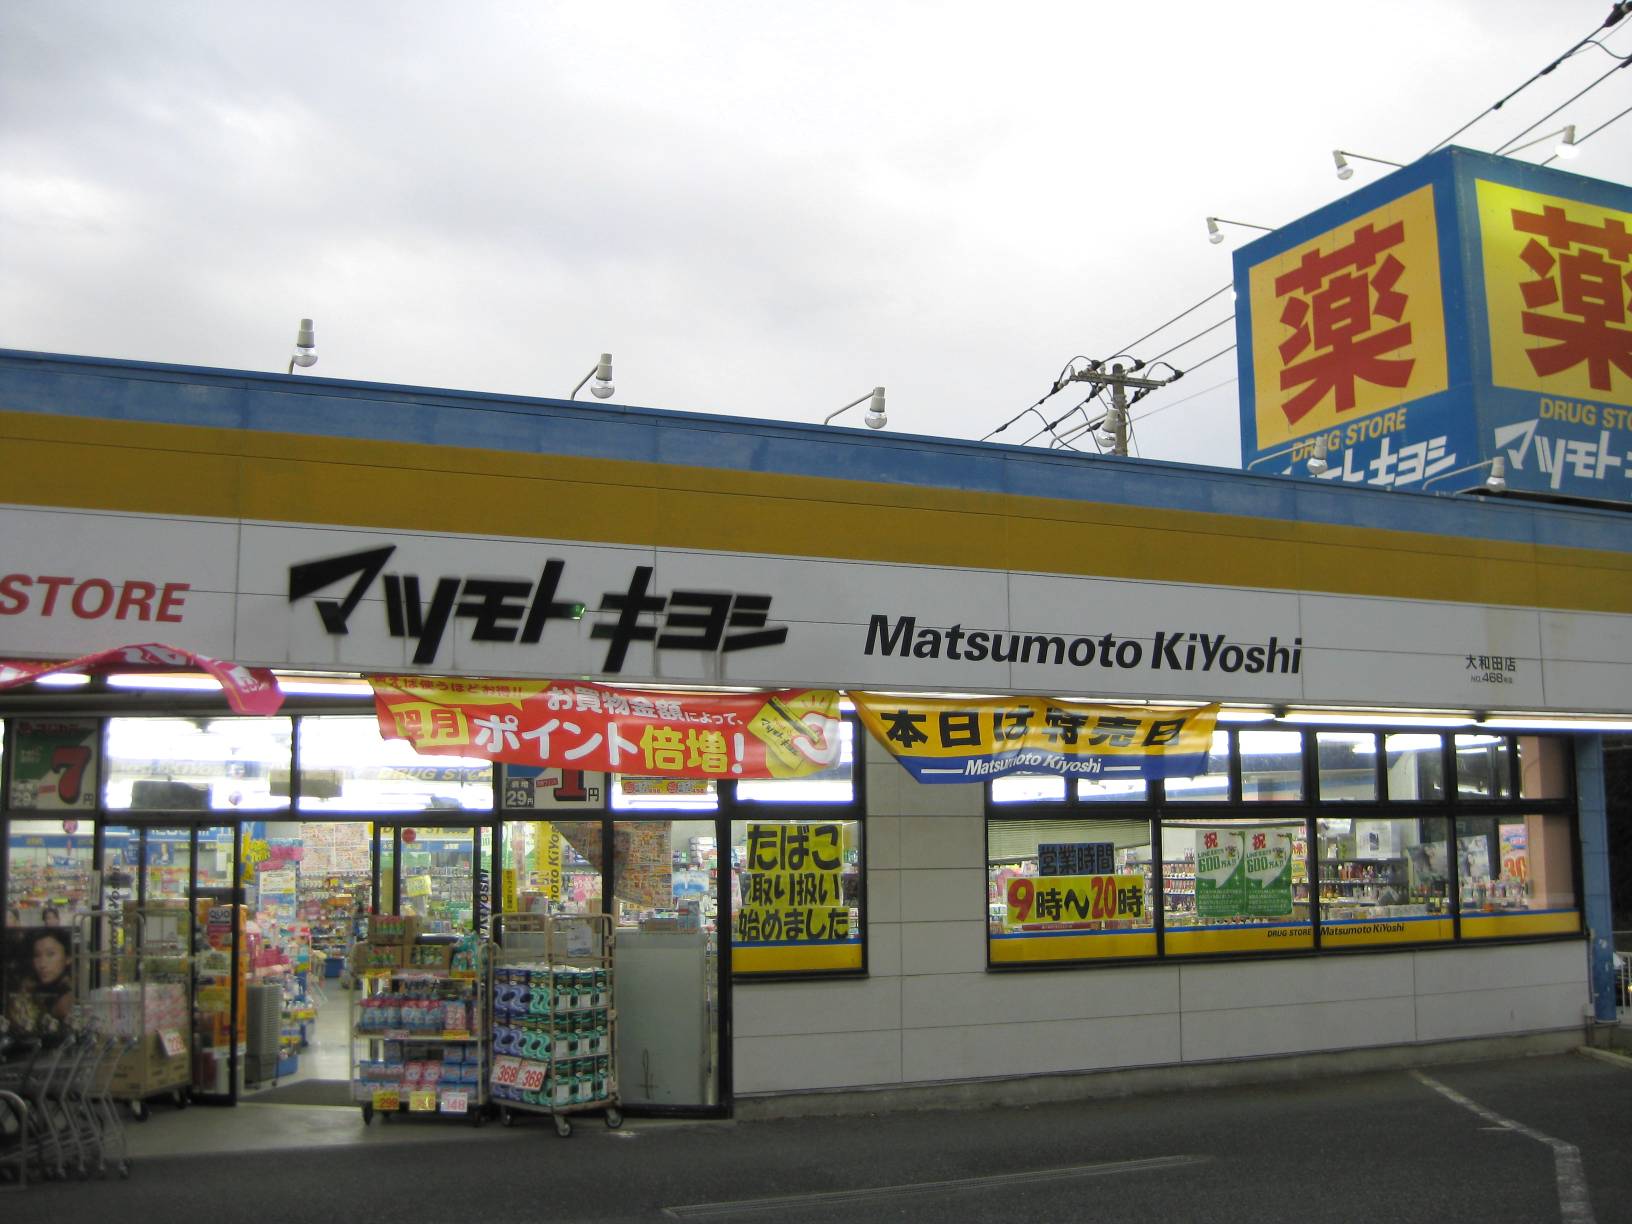 Dorakkusutoa. Drugstore Matsumotokiyoshi Owada store 963m to (drugstore)